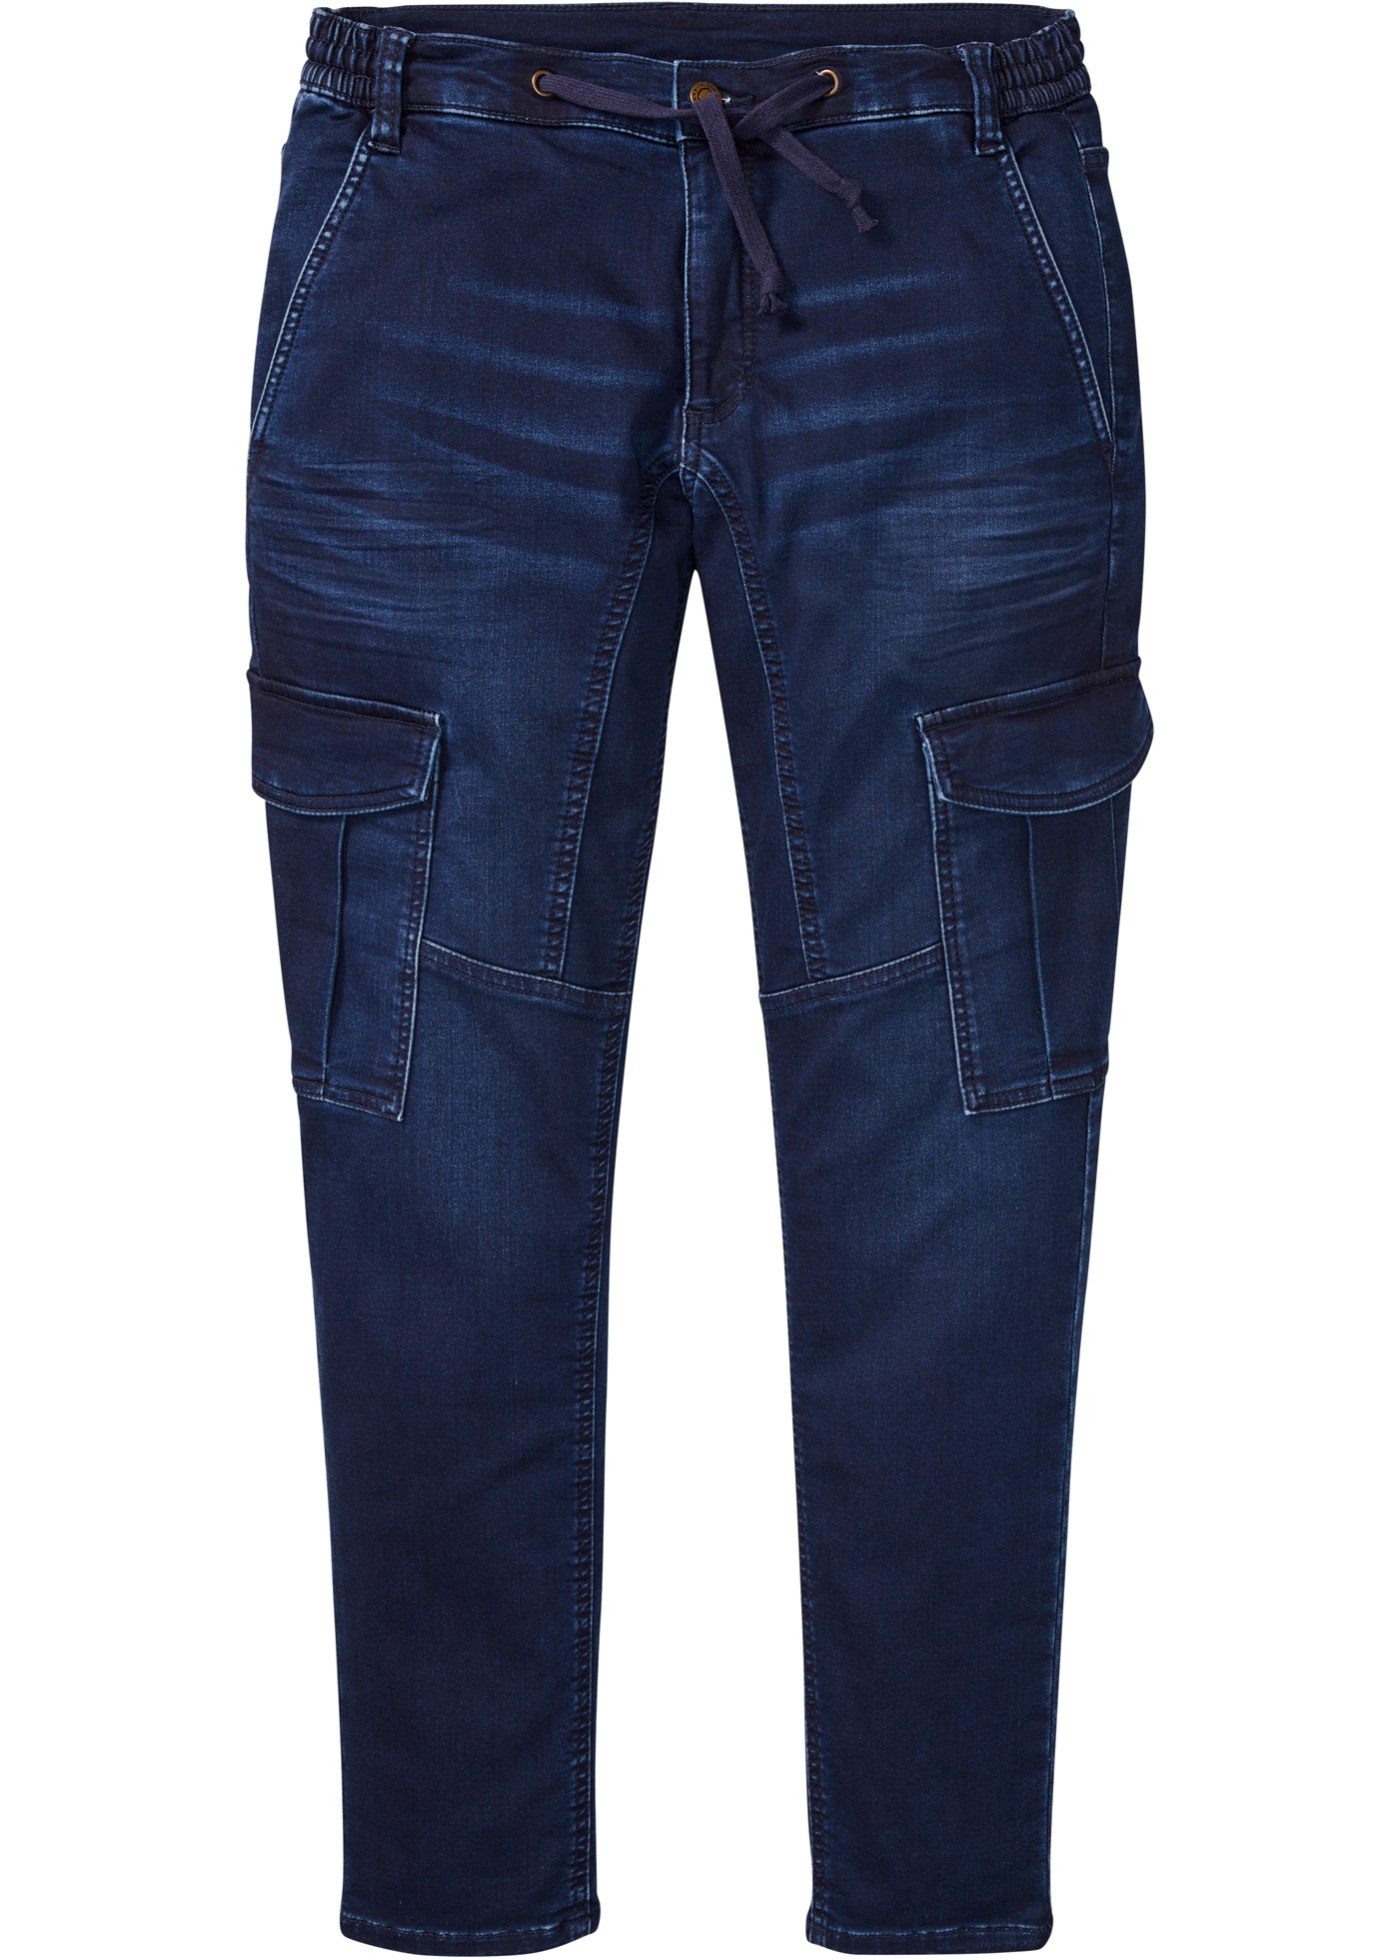 Regular fit cargo jogging jeans, tapered